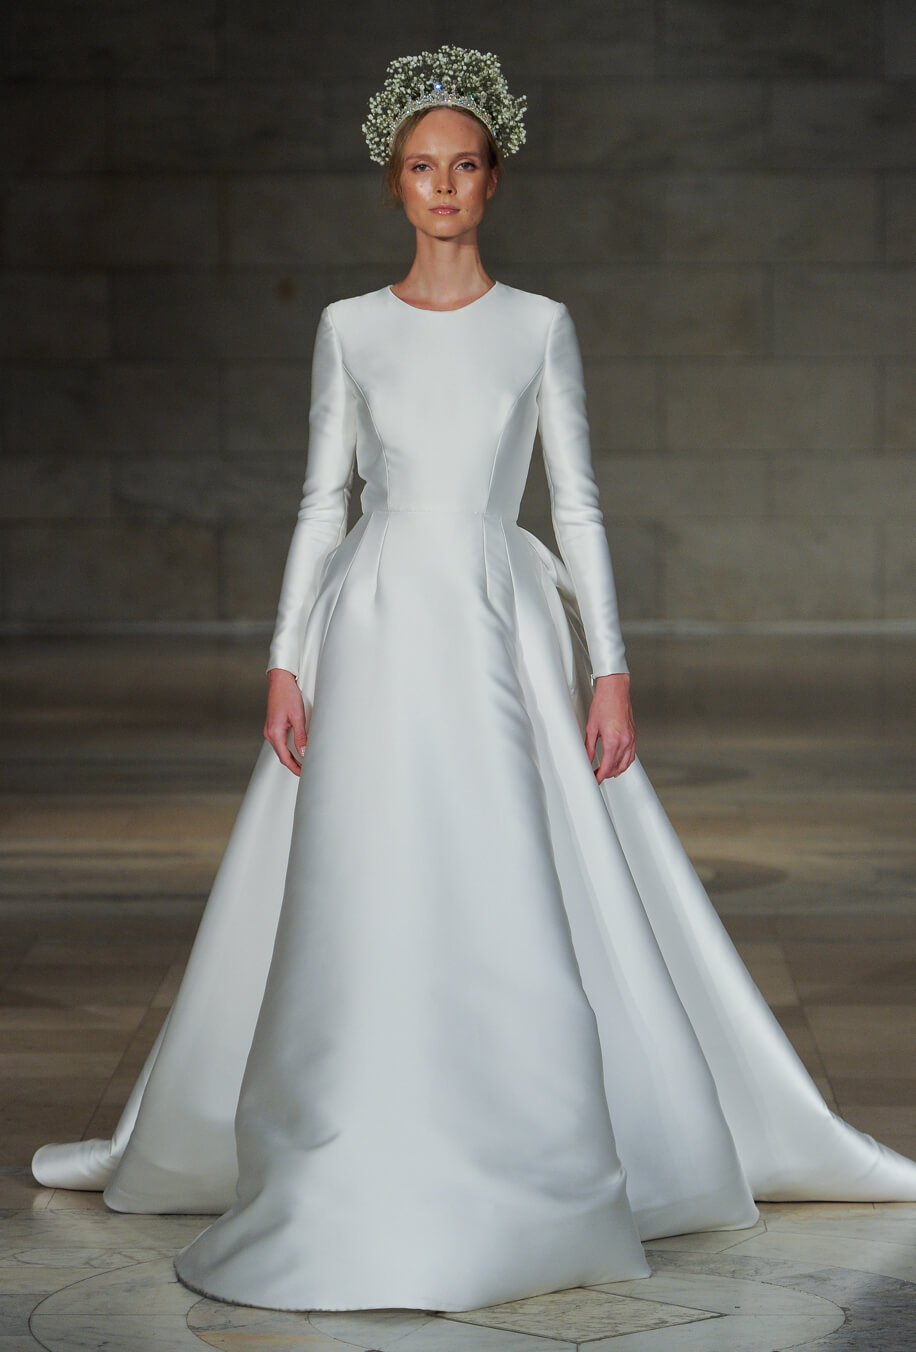 seem acra captivating wedding gown